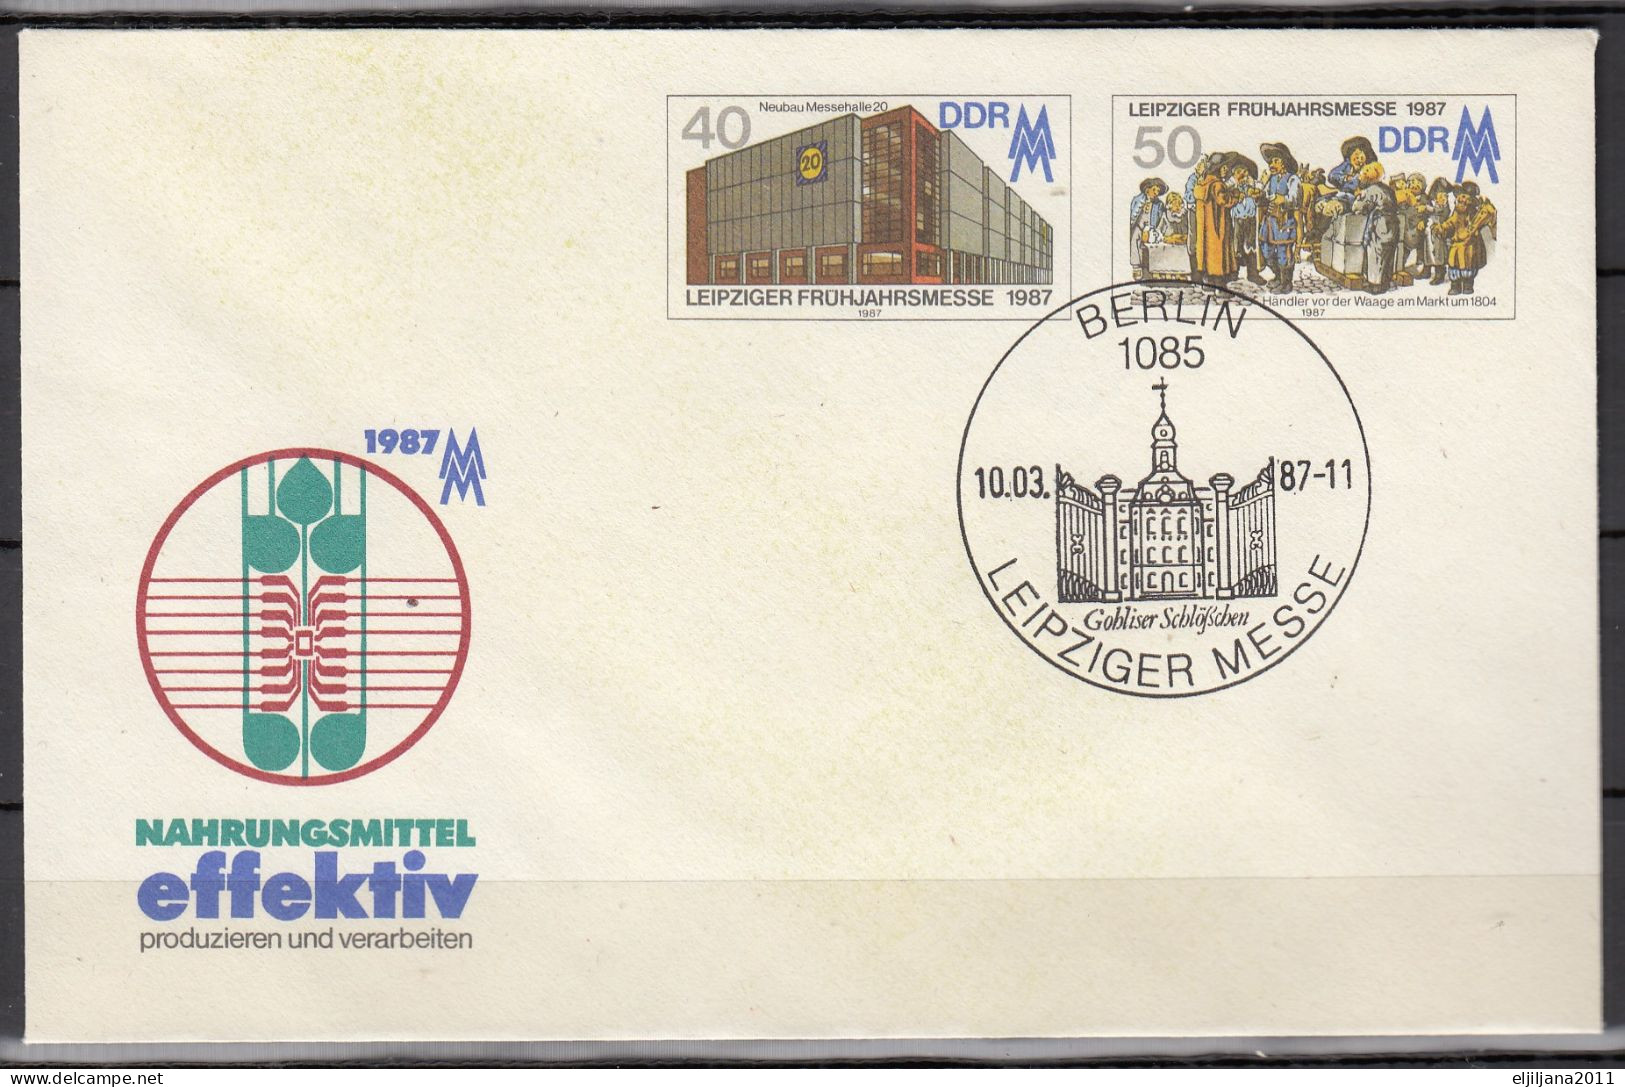 ⁕ Germany DDR 1987 ⁕ "effektiv" - Leipziger Frühjahrsmesse / Postal Stationery ⁕ 2v Unused Cover - Buste - Nuovi